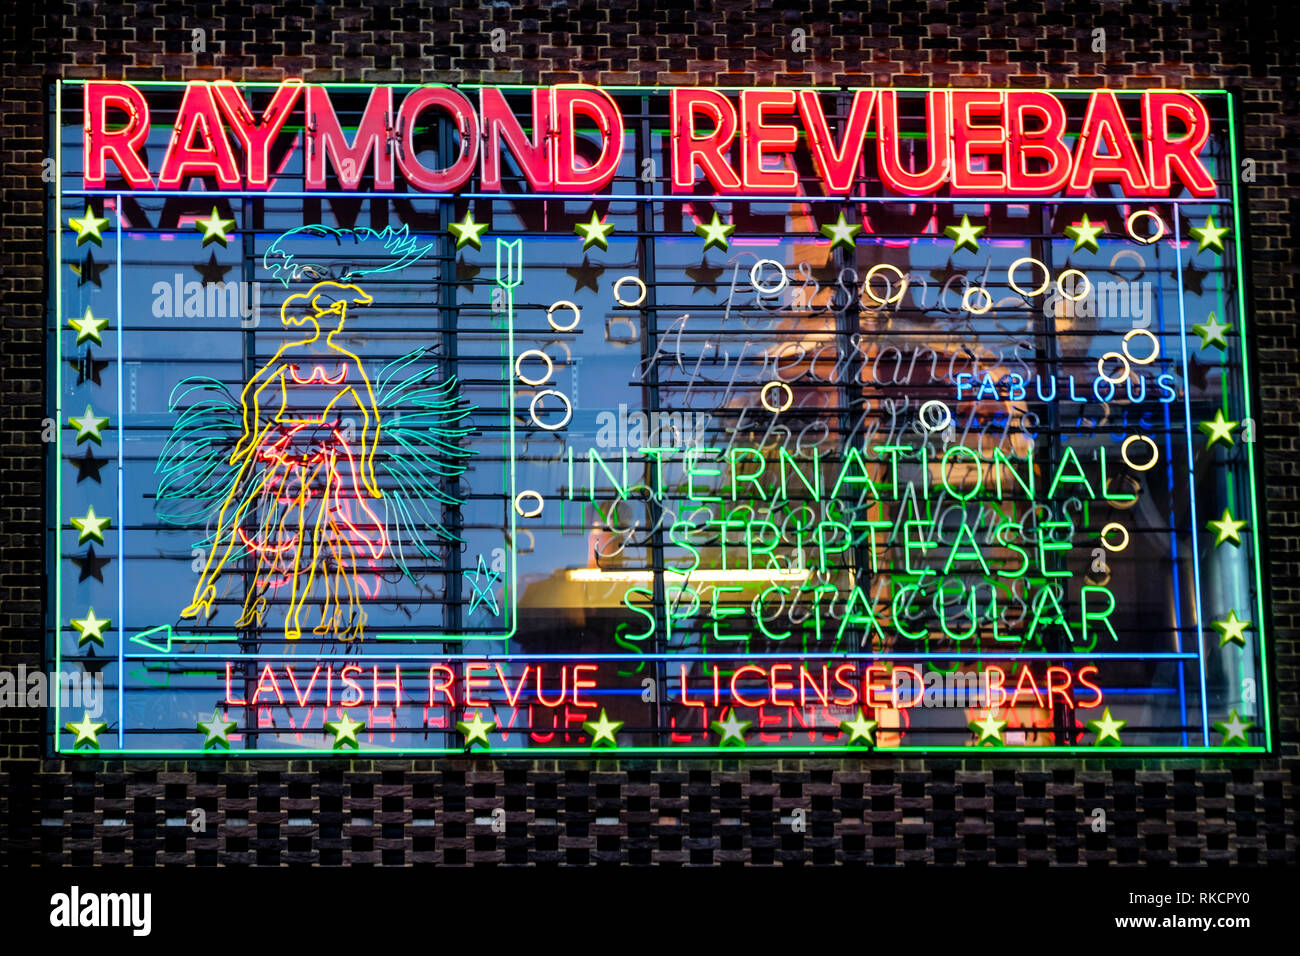 raymond-revue-bar-neon-sign-soho-londonuk-RKCPY0.jpg